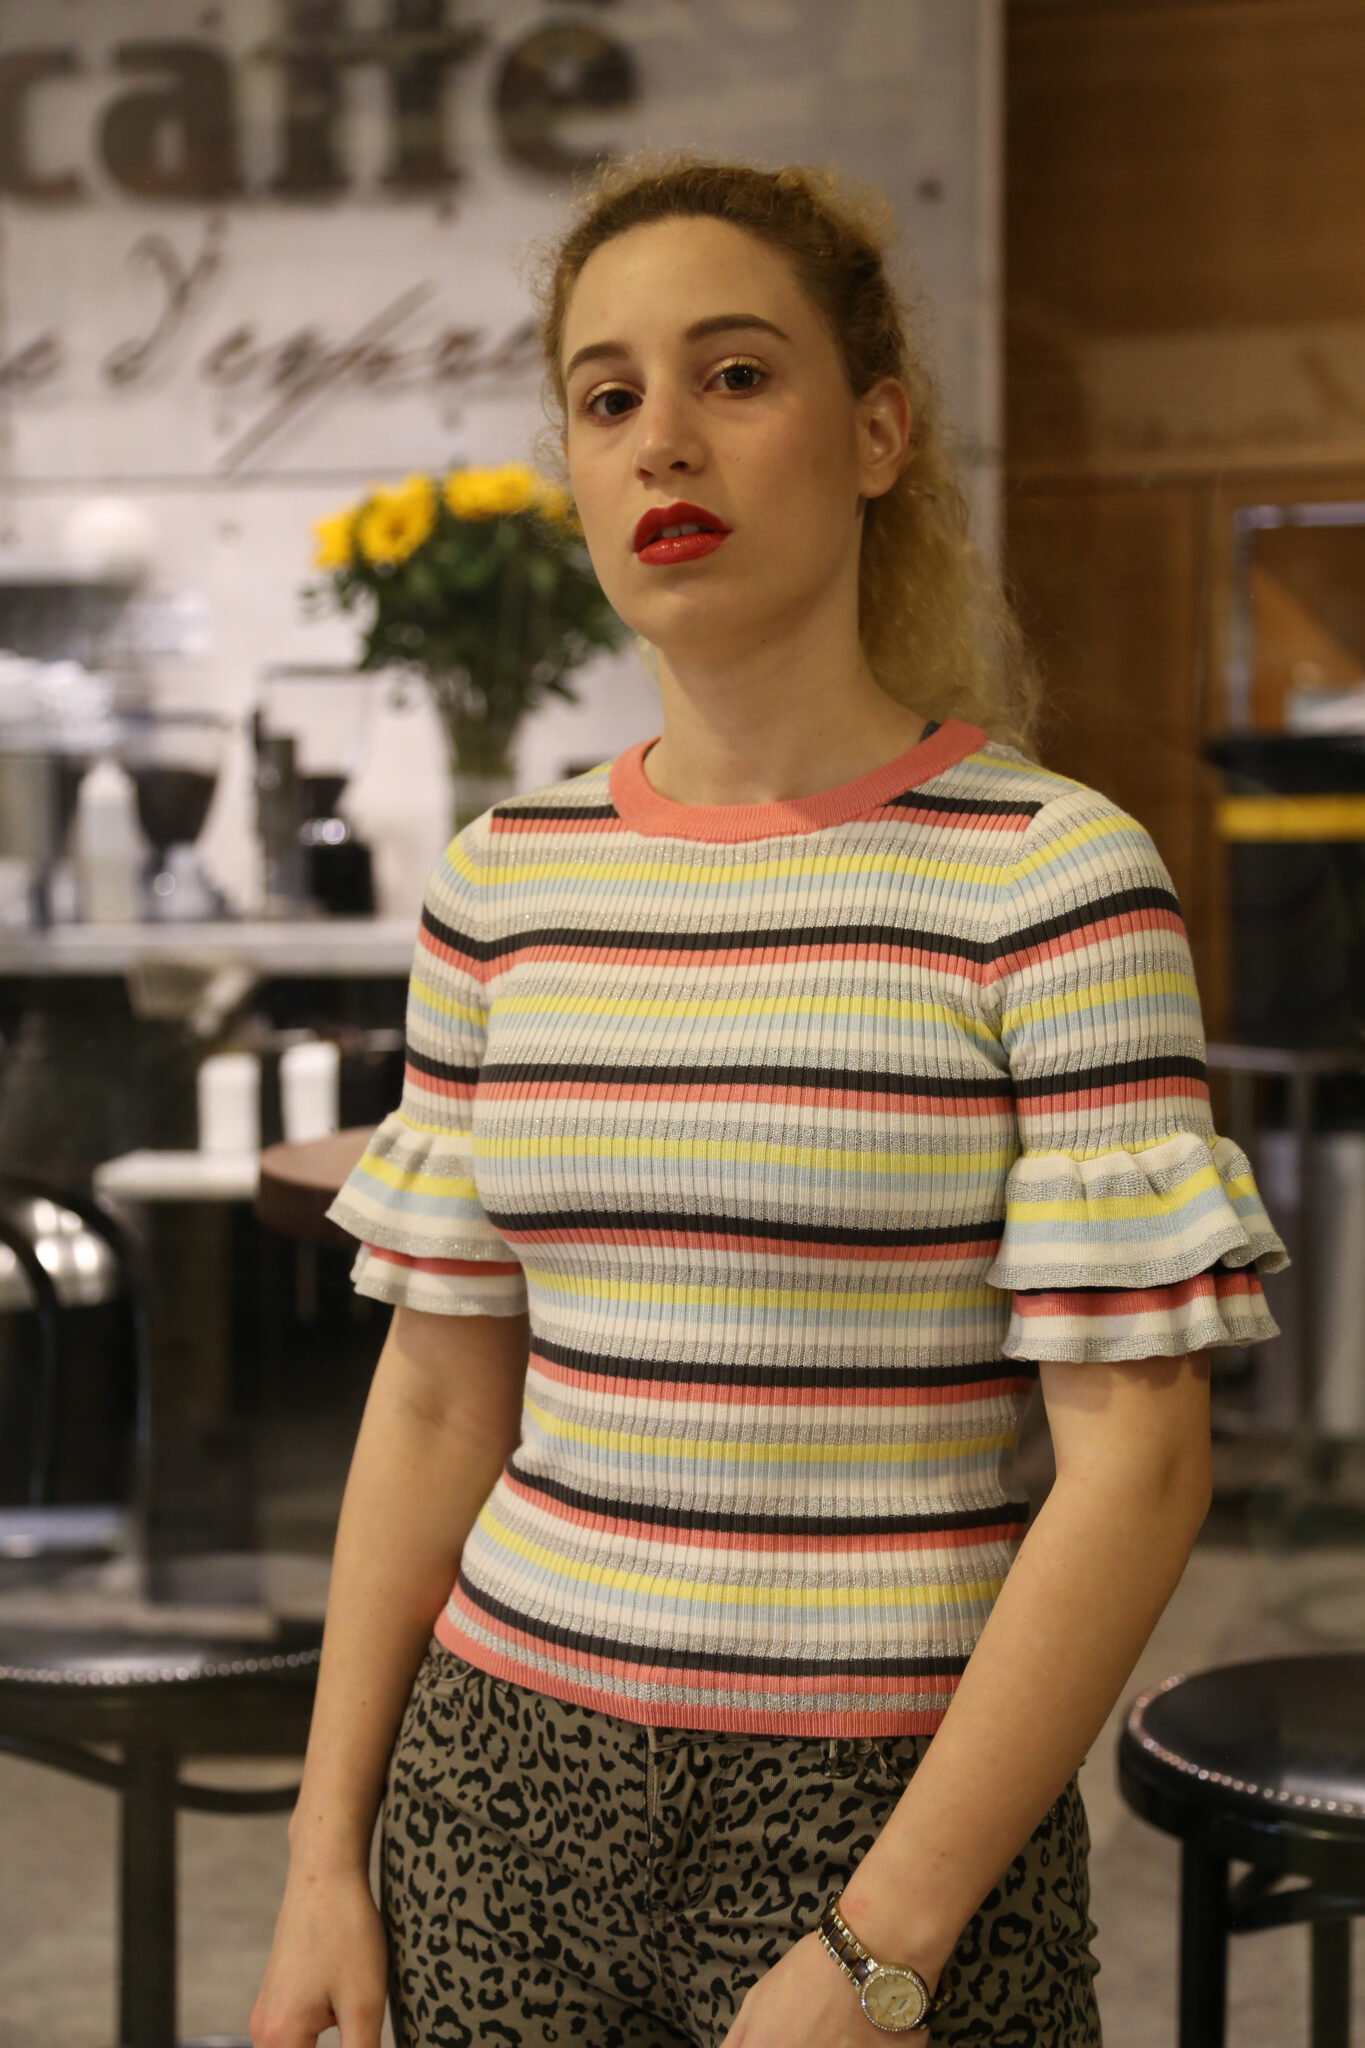 rainbow stipes fashionאופנת פסים בצבעי הקשת